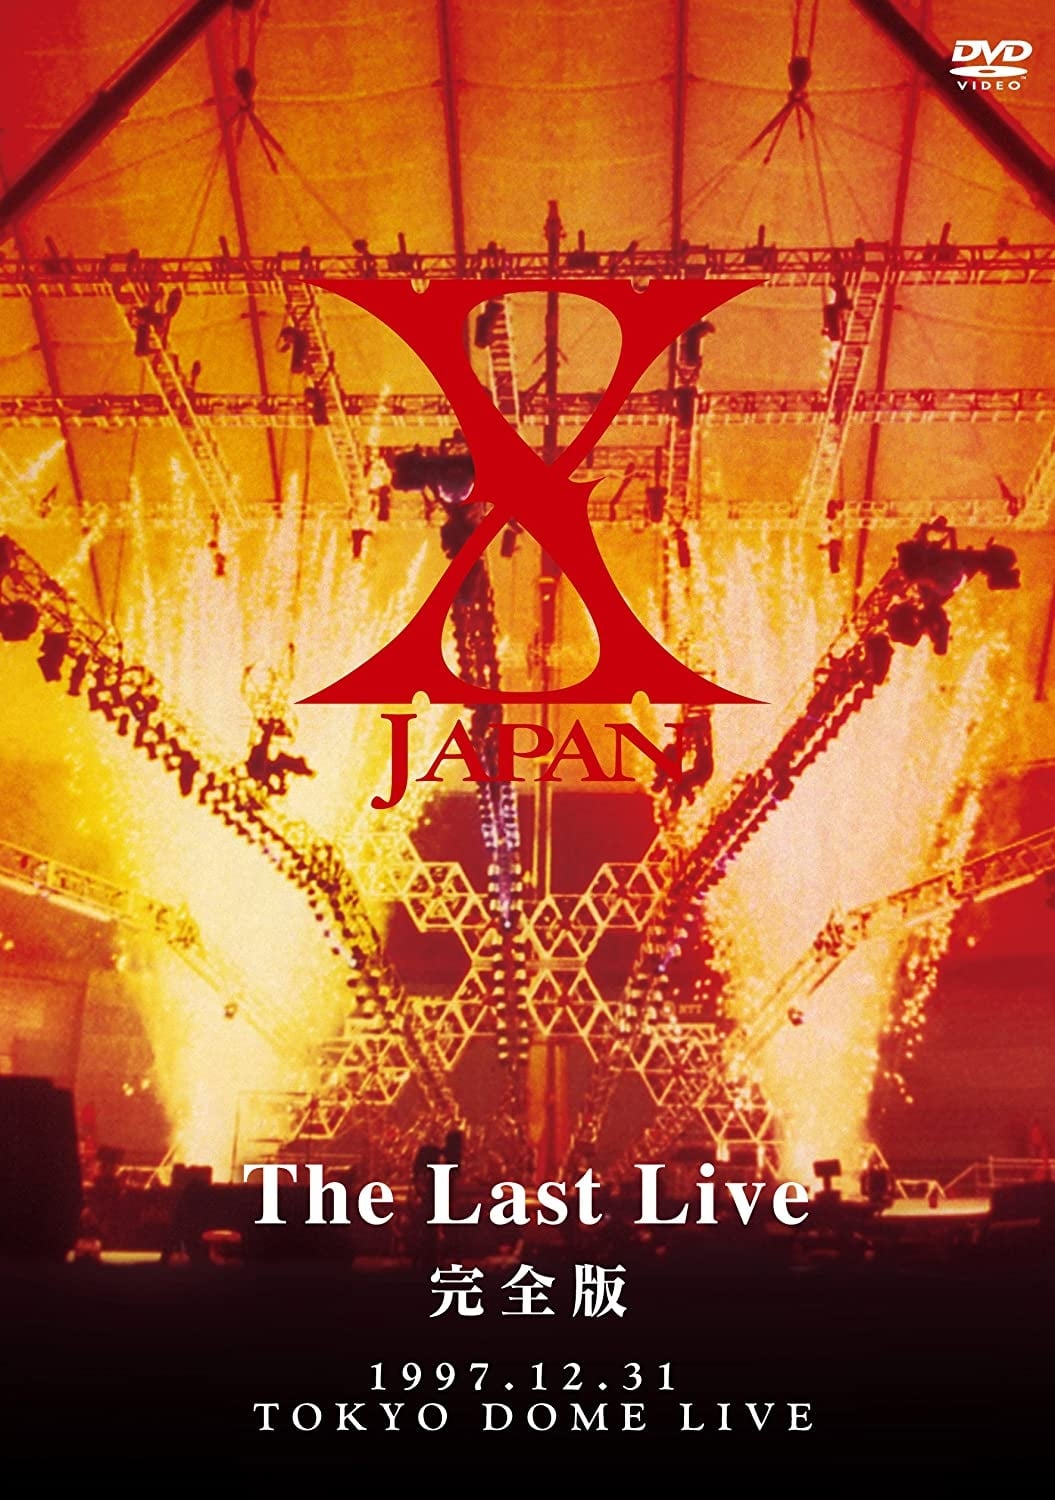 X JAPAN - The Last Live